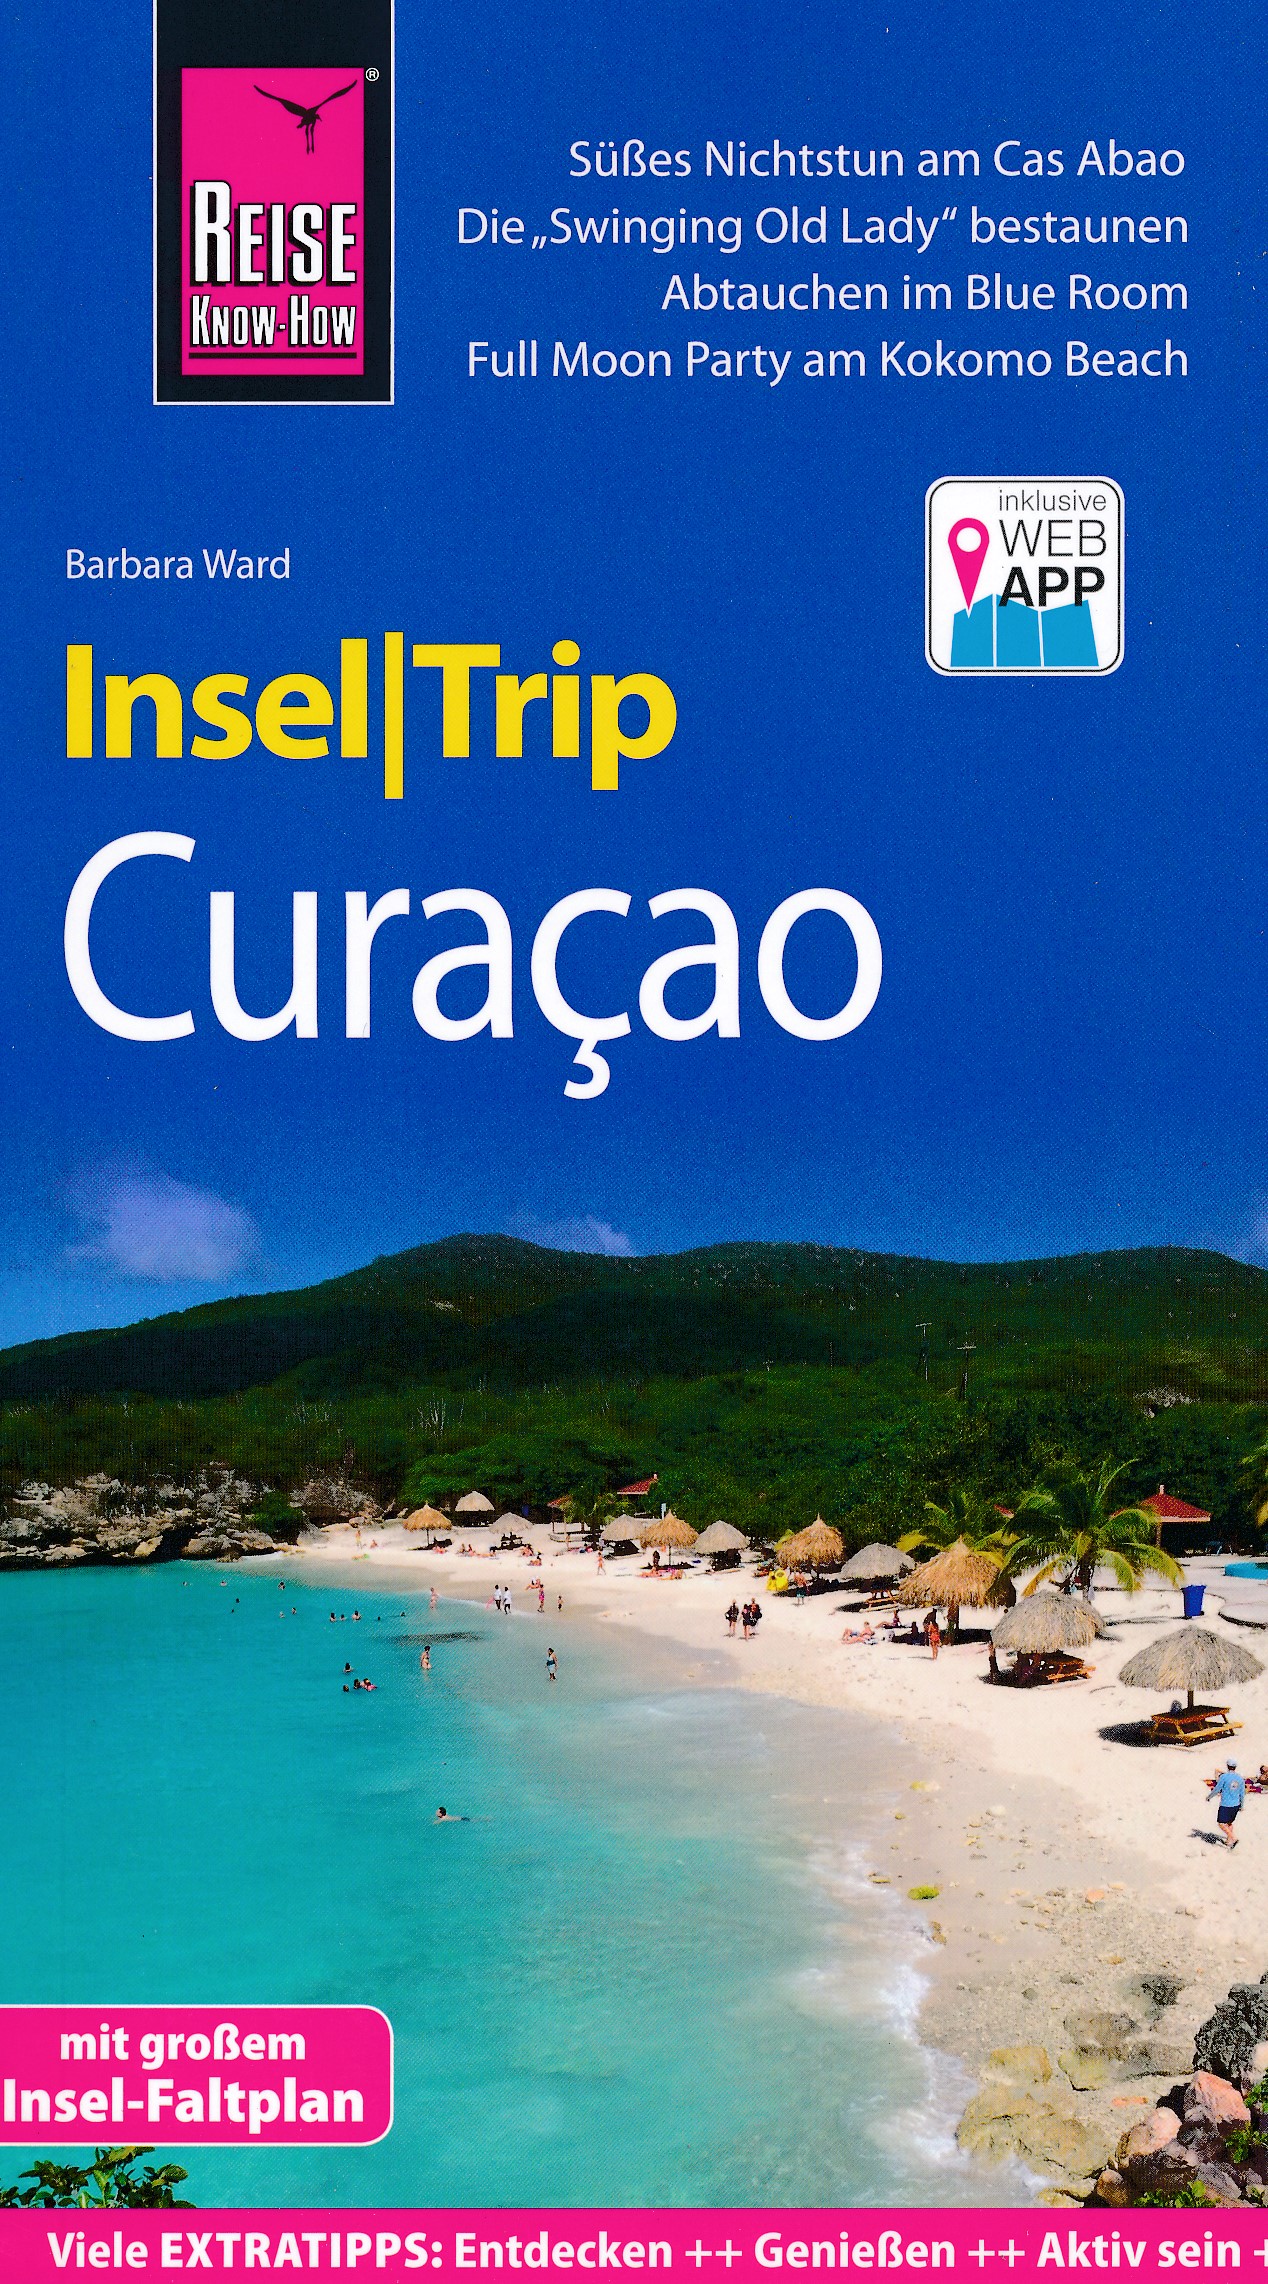 Online bestellen: Reisgids Insel|Trip Curaçao - Curacao | Reise Know-How Verlag